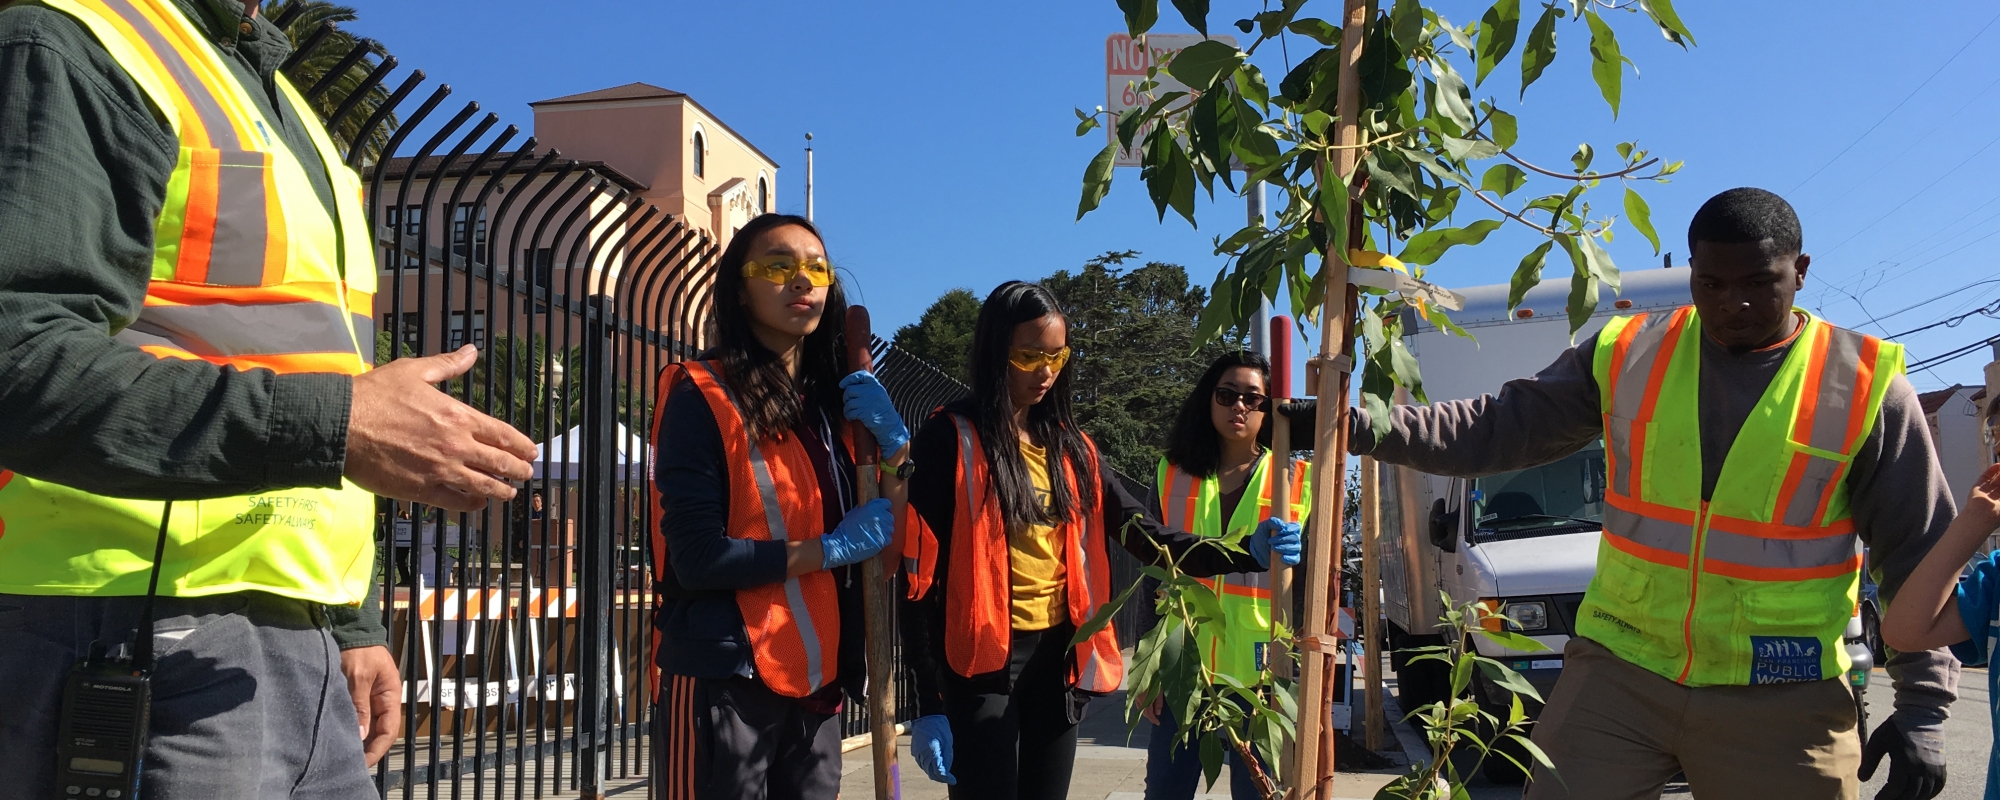 volunteers work with arborist to plant tree